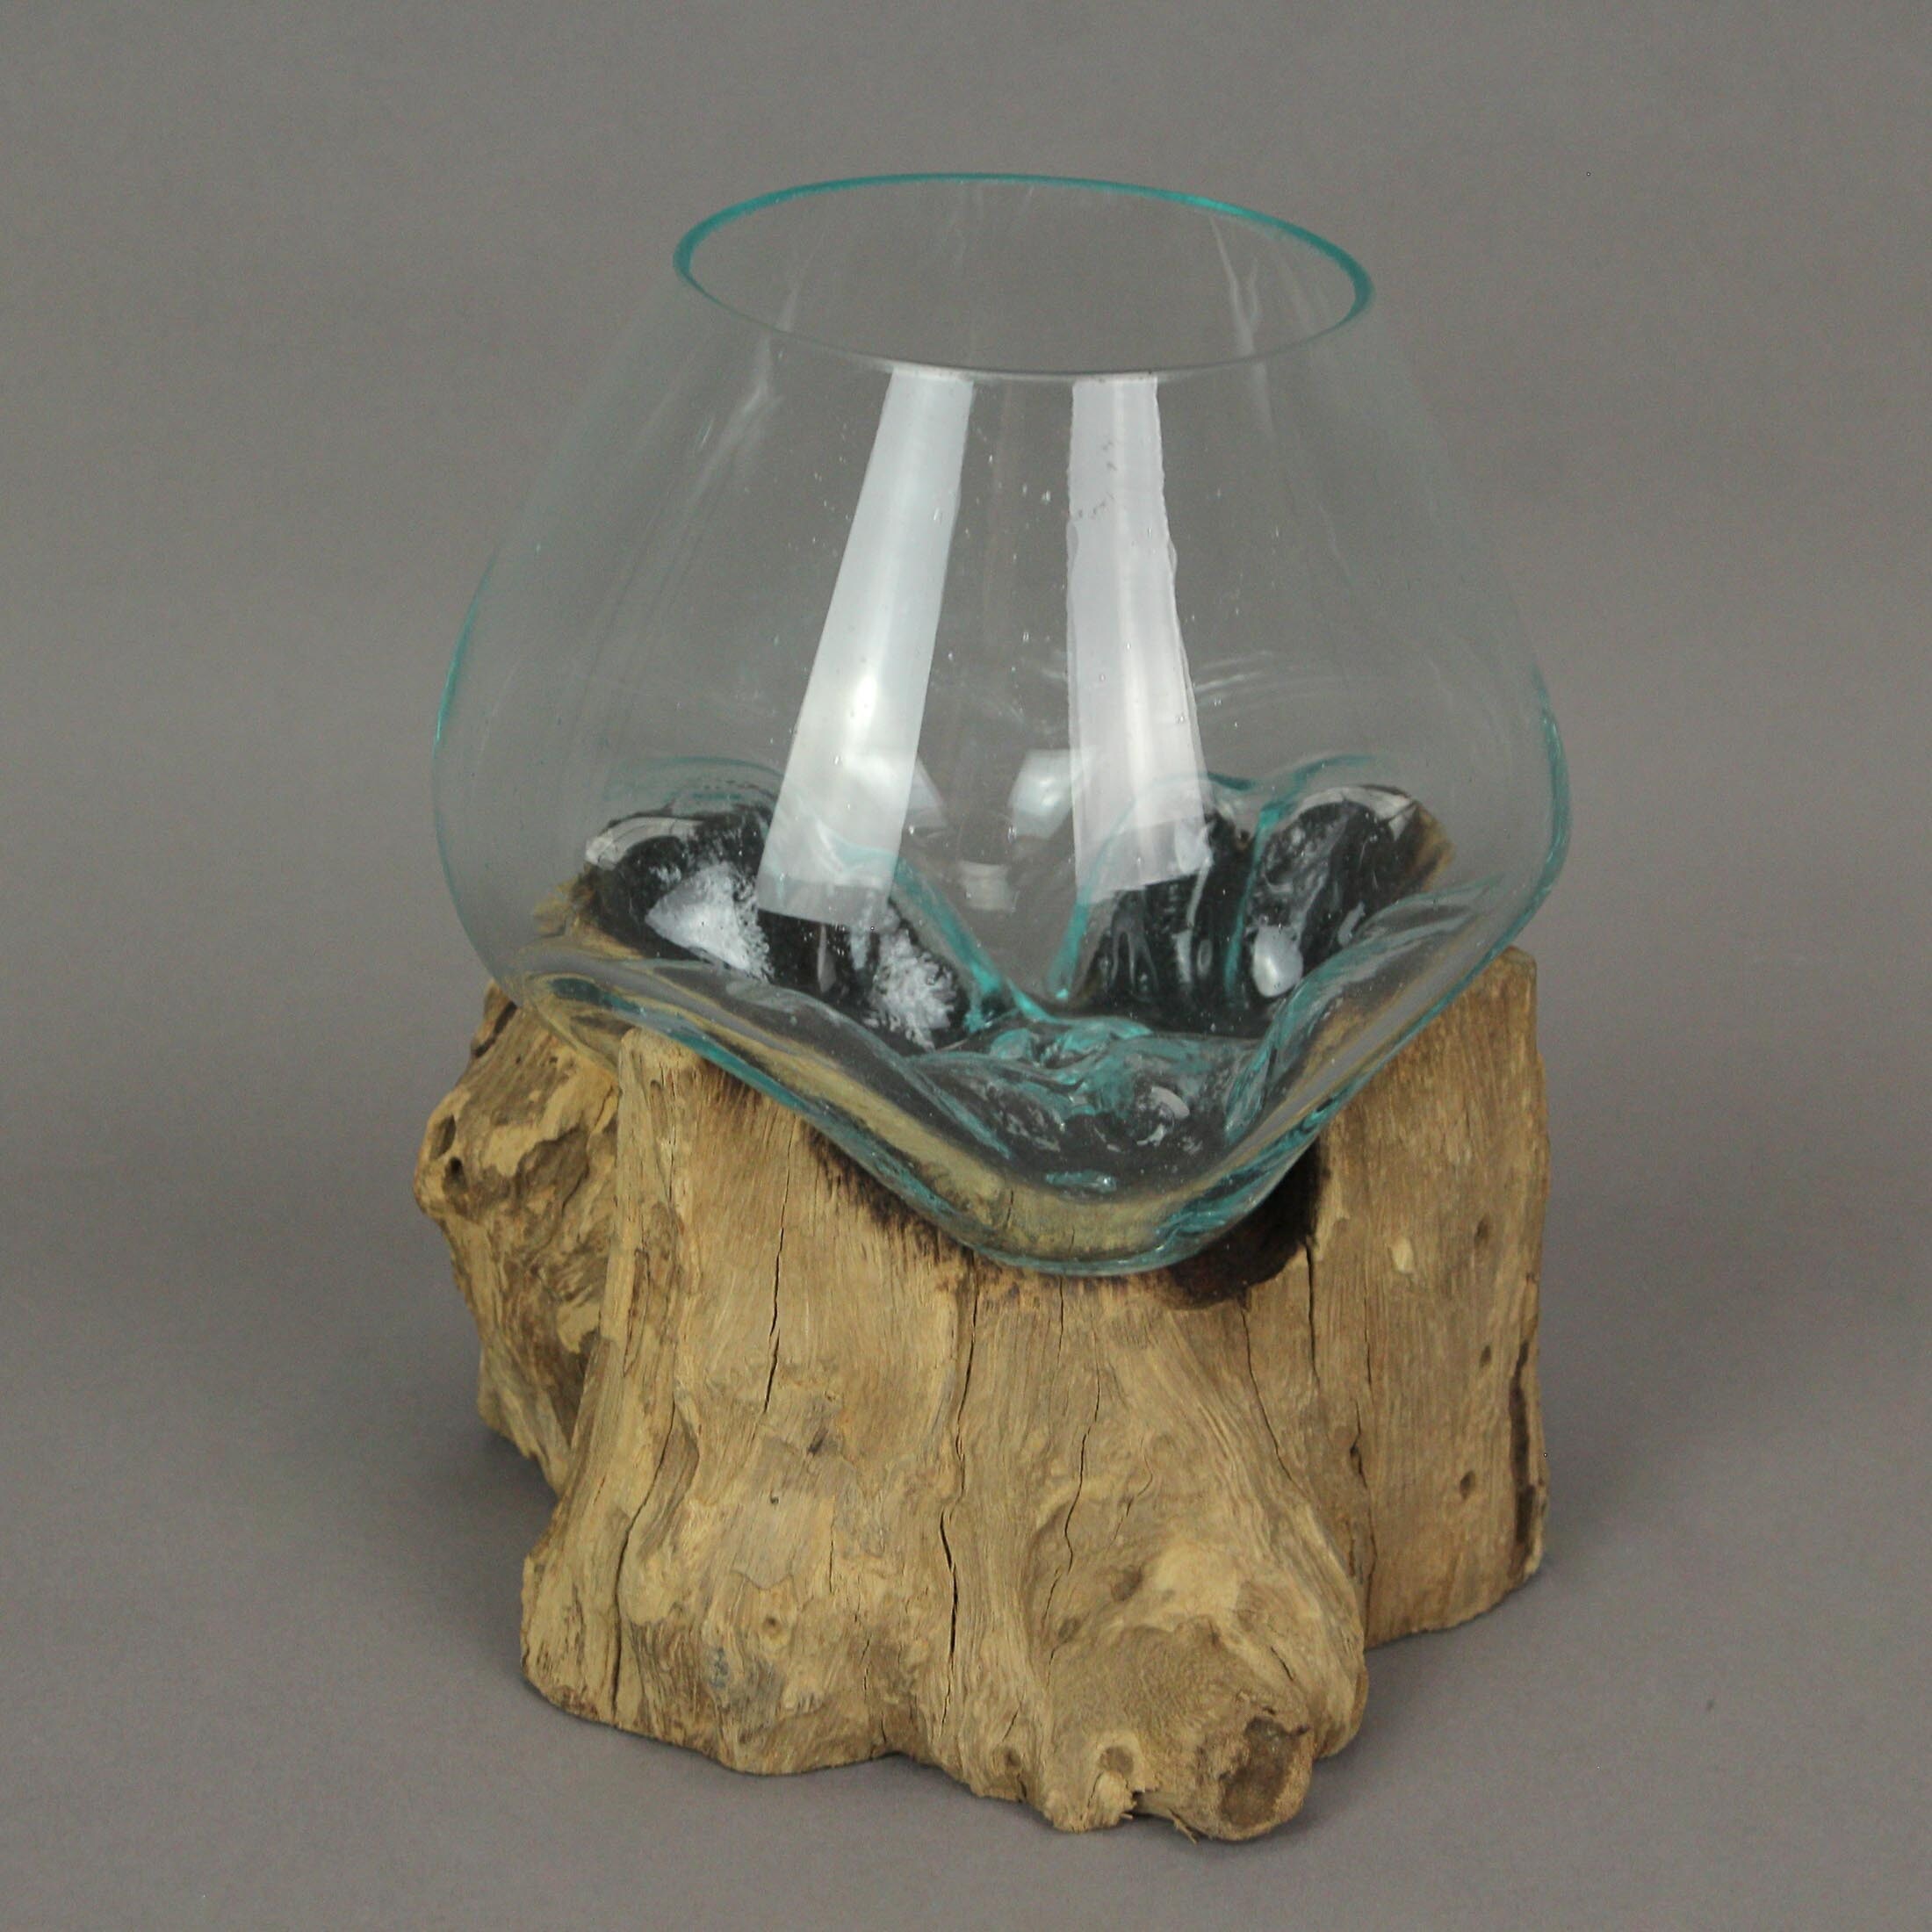 Zeckos Melted Glass On Driftwood Decorative Bowl/Vase/Terrarium